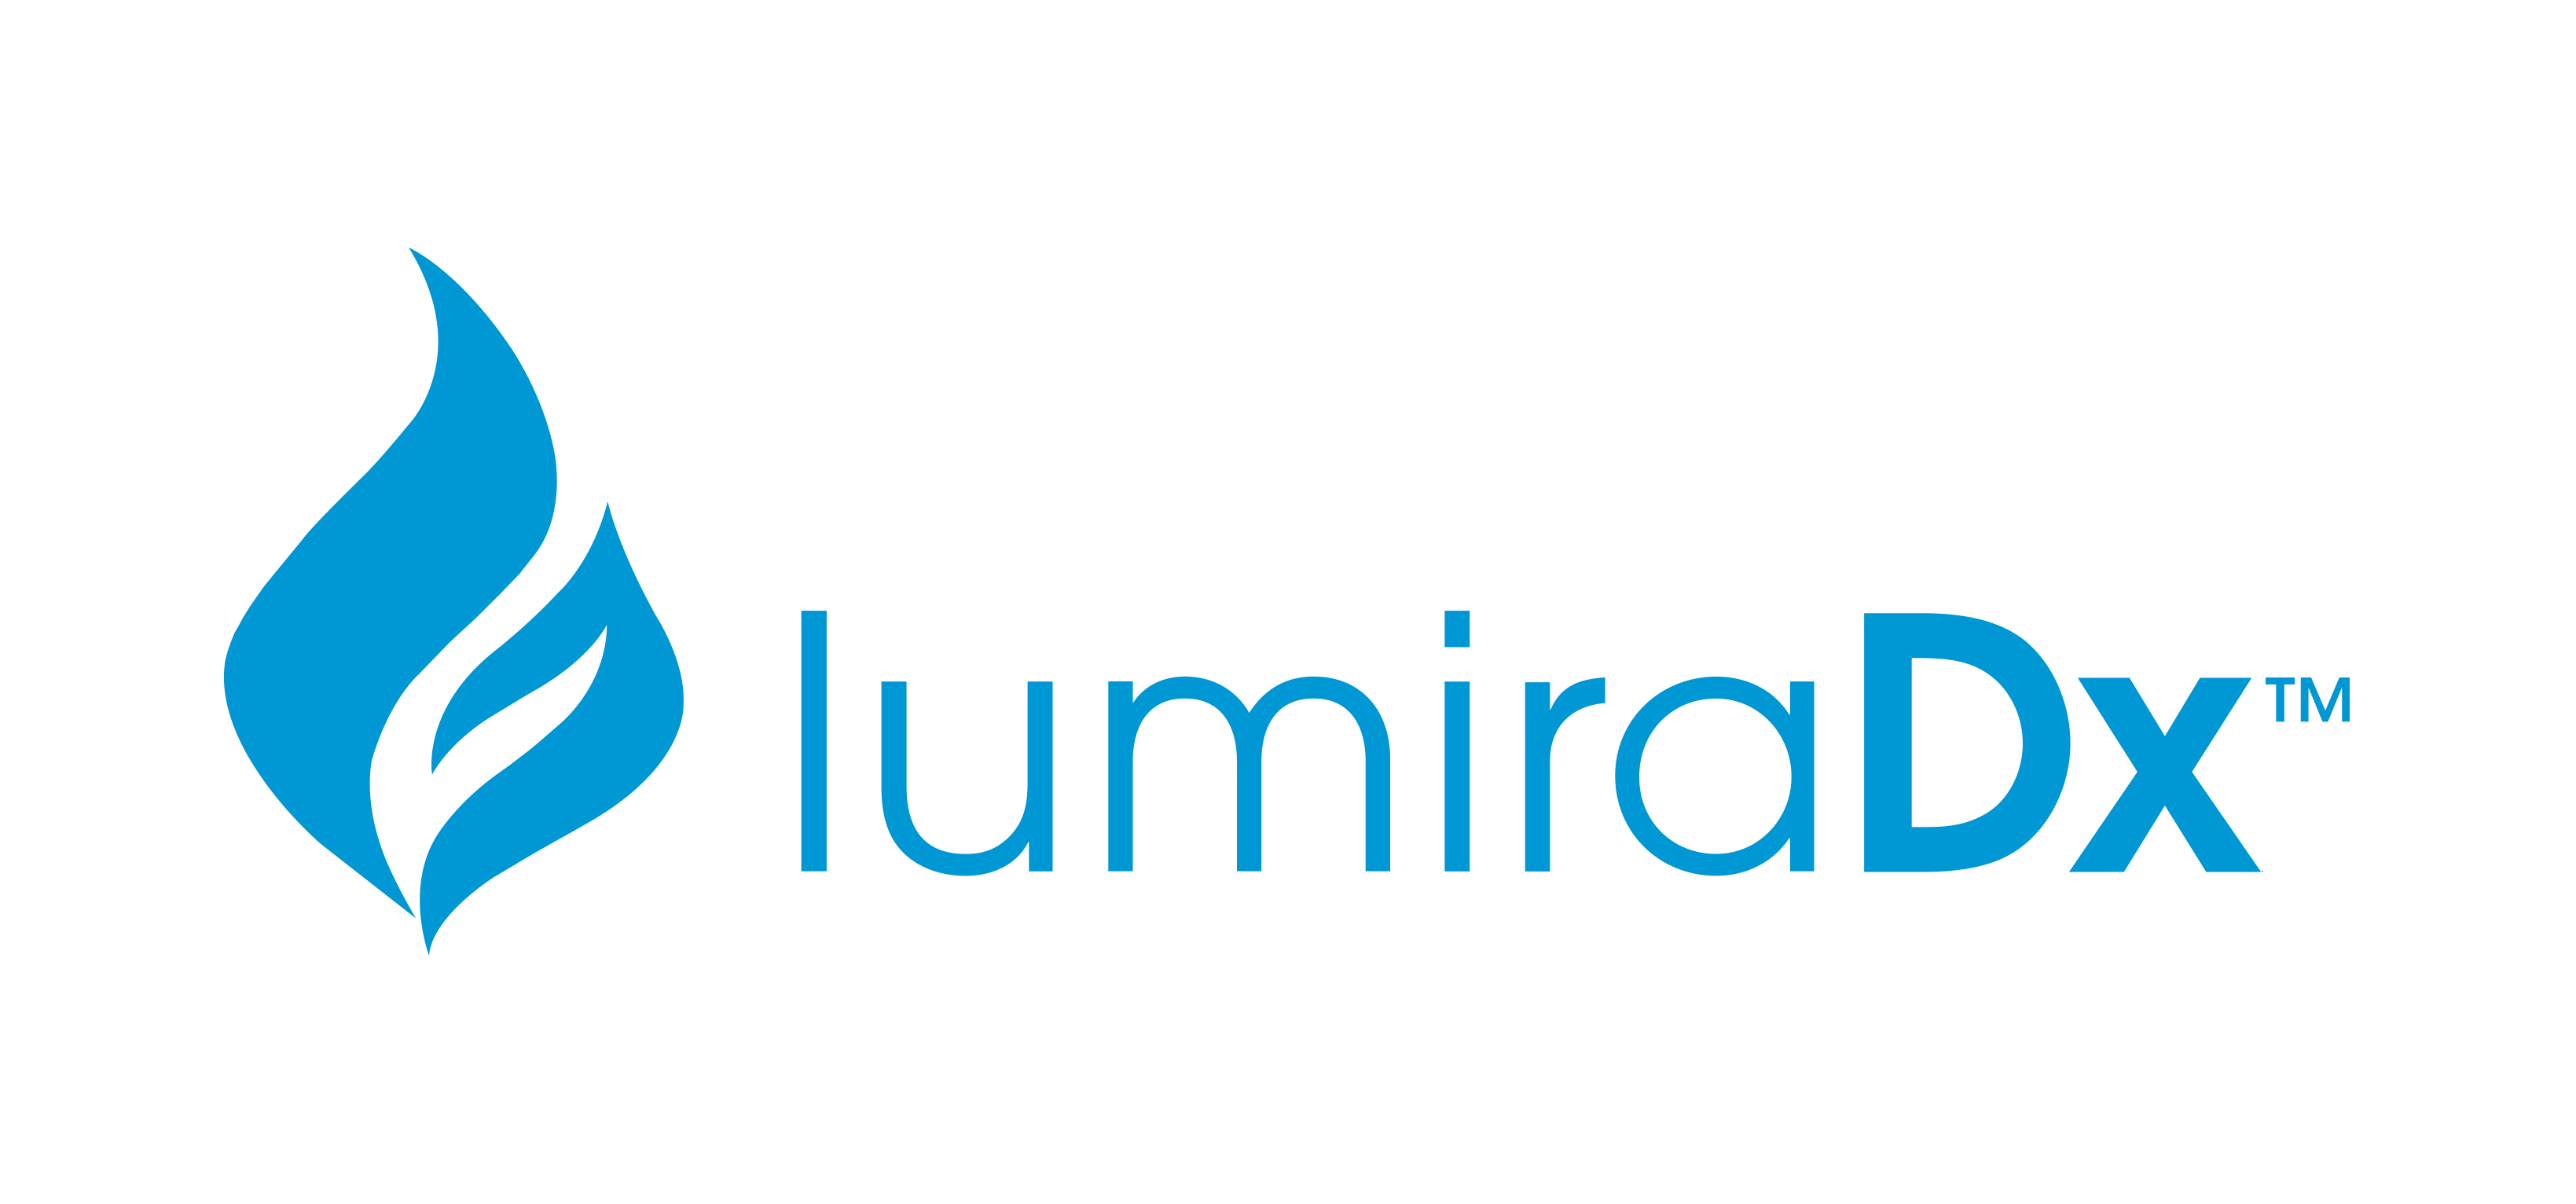 LumiraDx_Logo_Blue Horizontal_TM[21].png